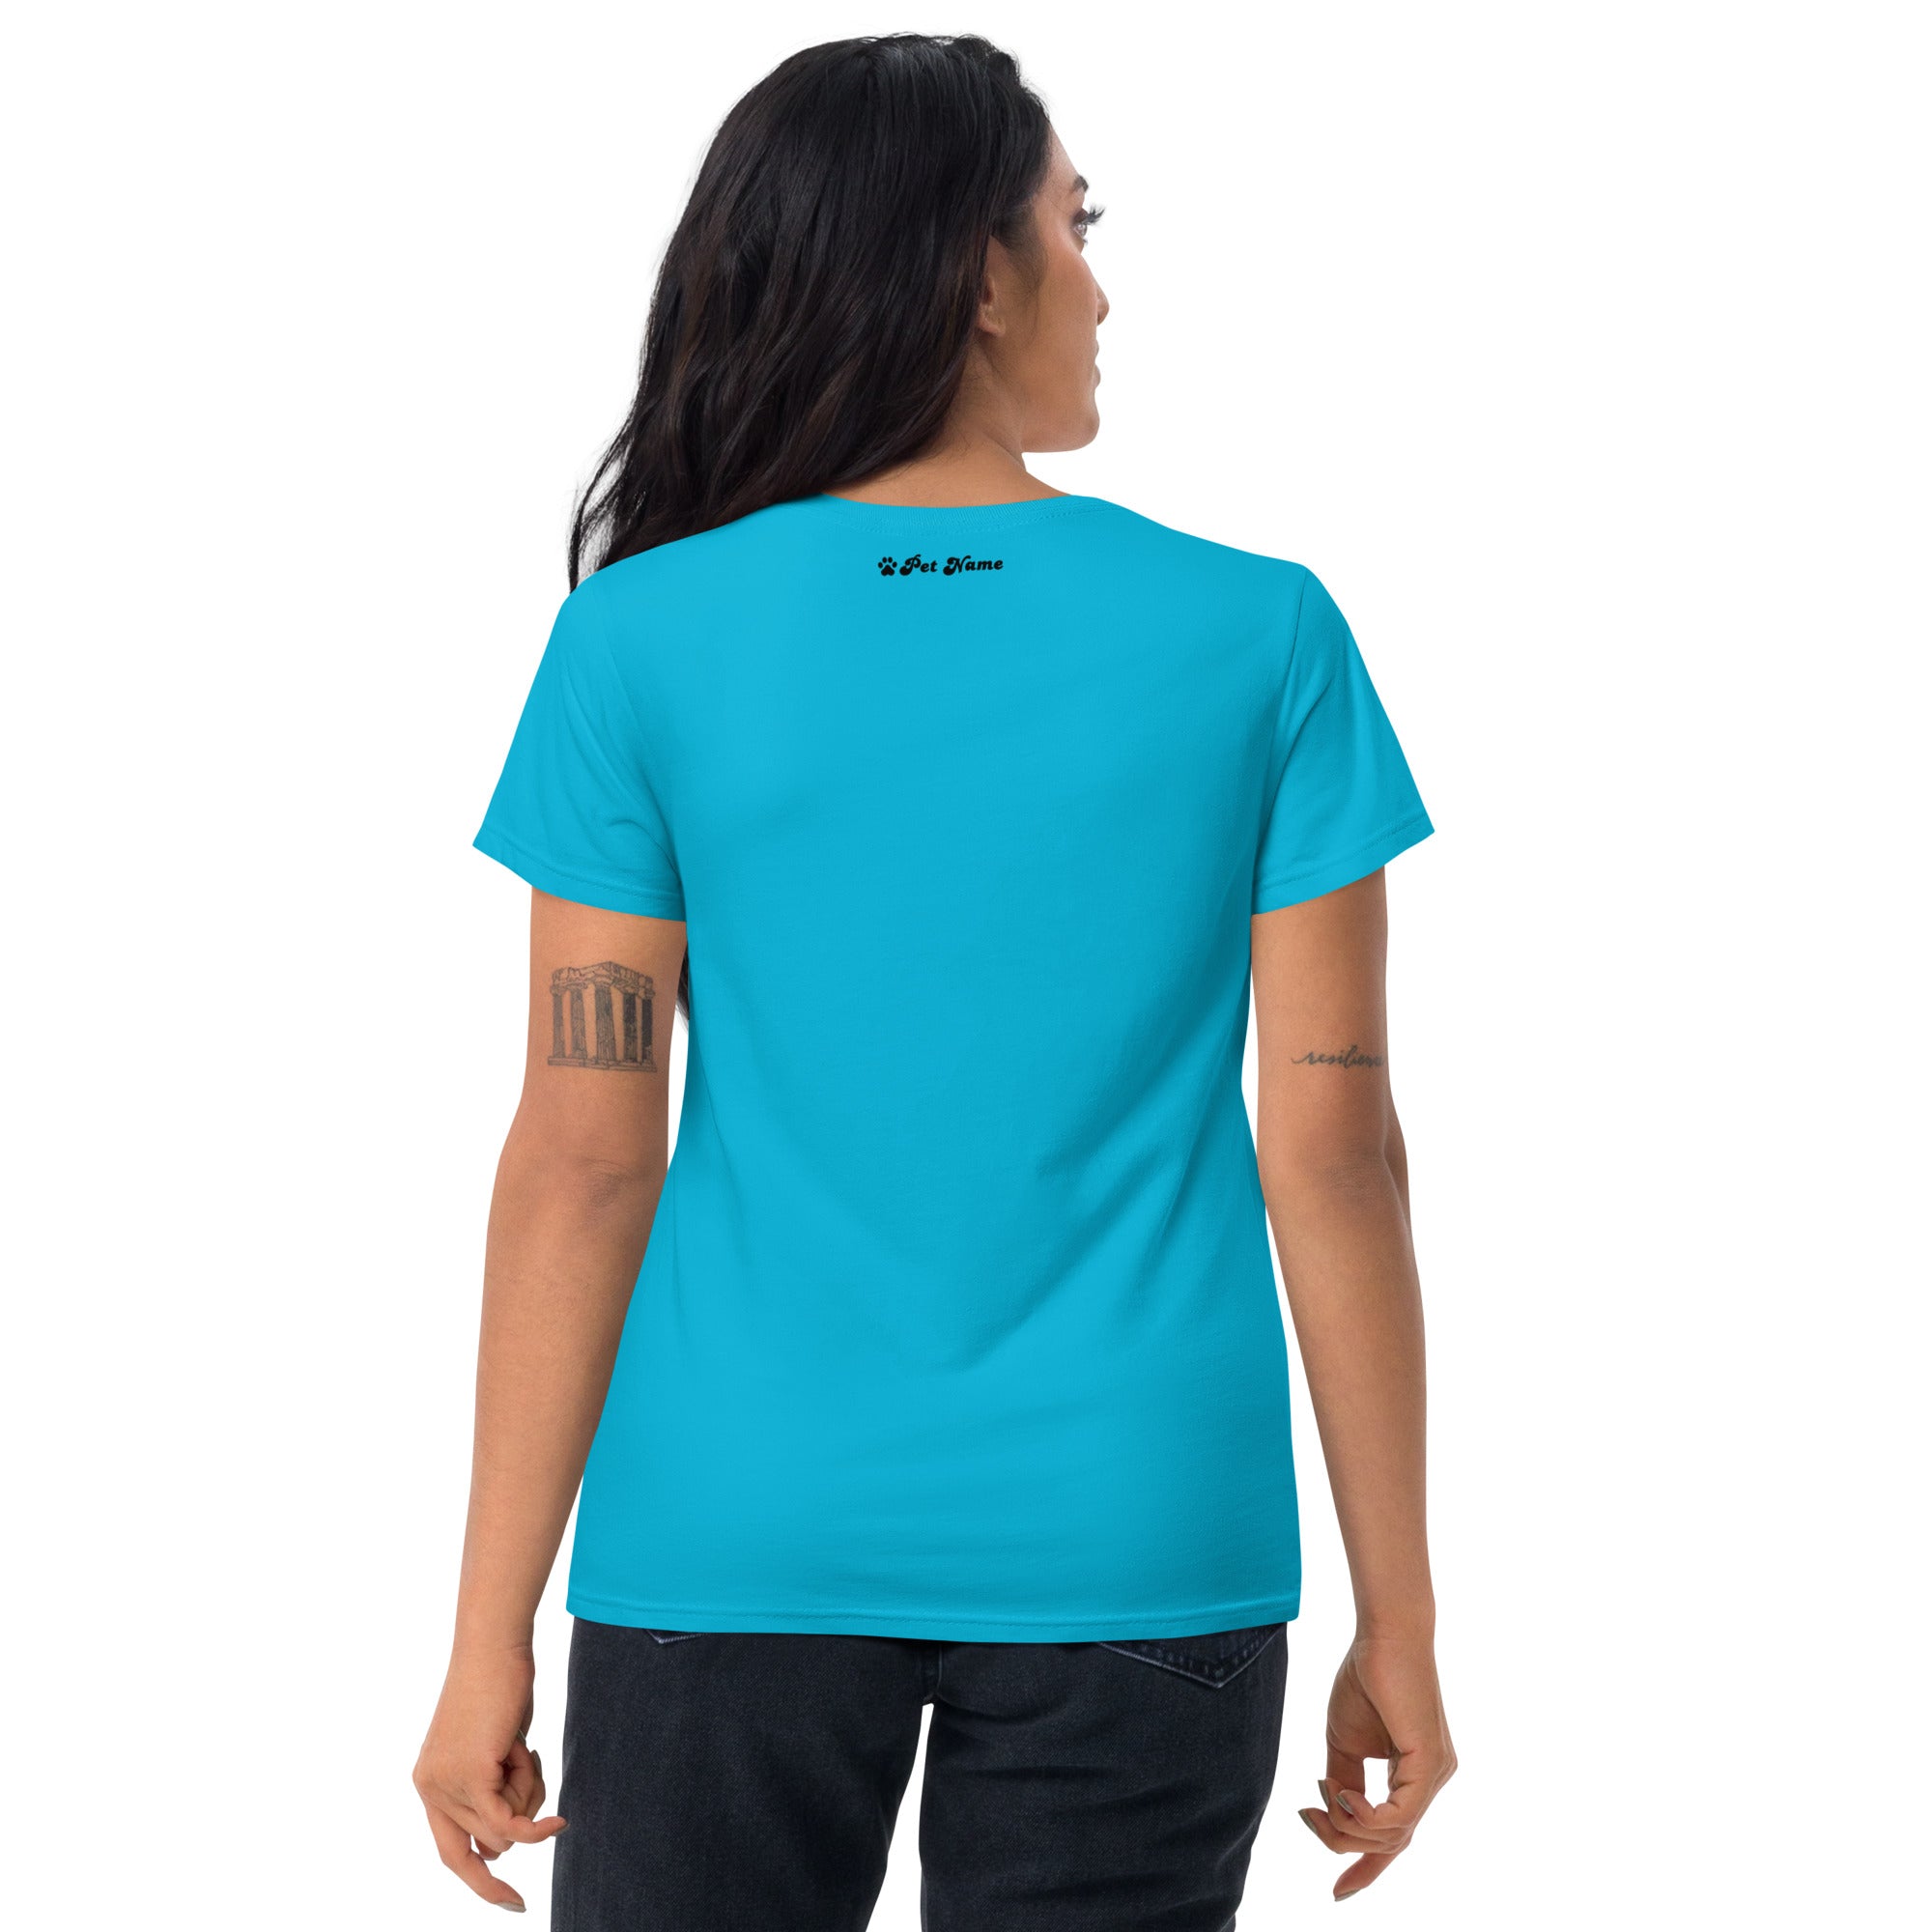 Whippet Women's short sleeve t-shirt